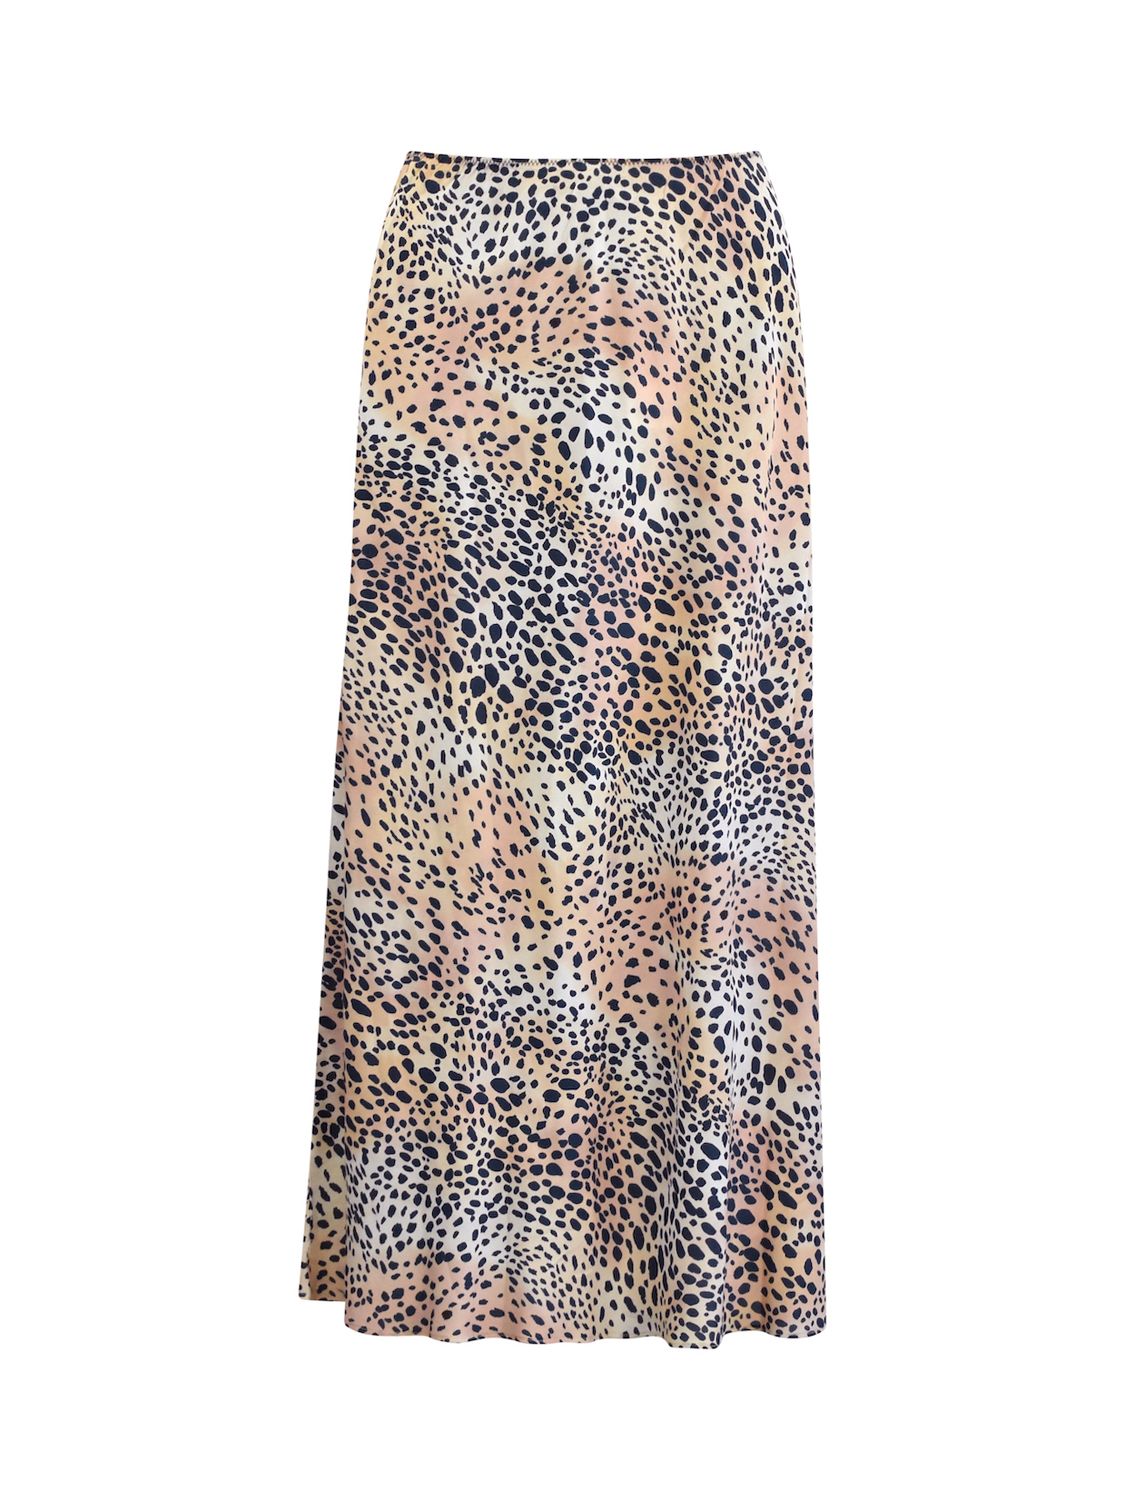 Ro&Zo Leopard Print Bias Cut Maxi Skirt, Brown, 6